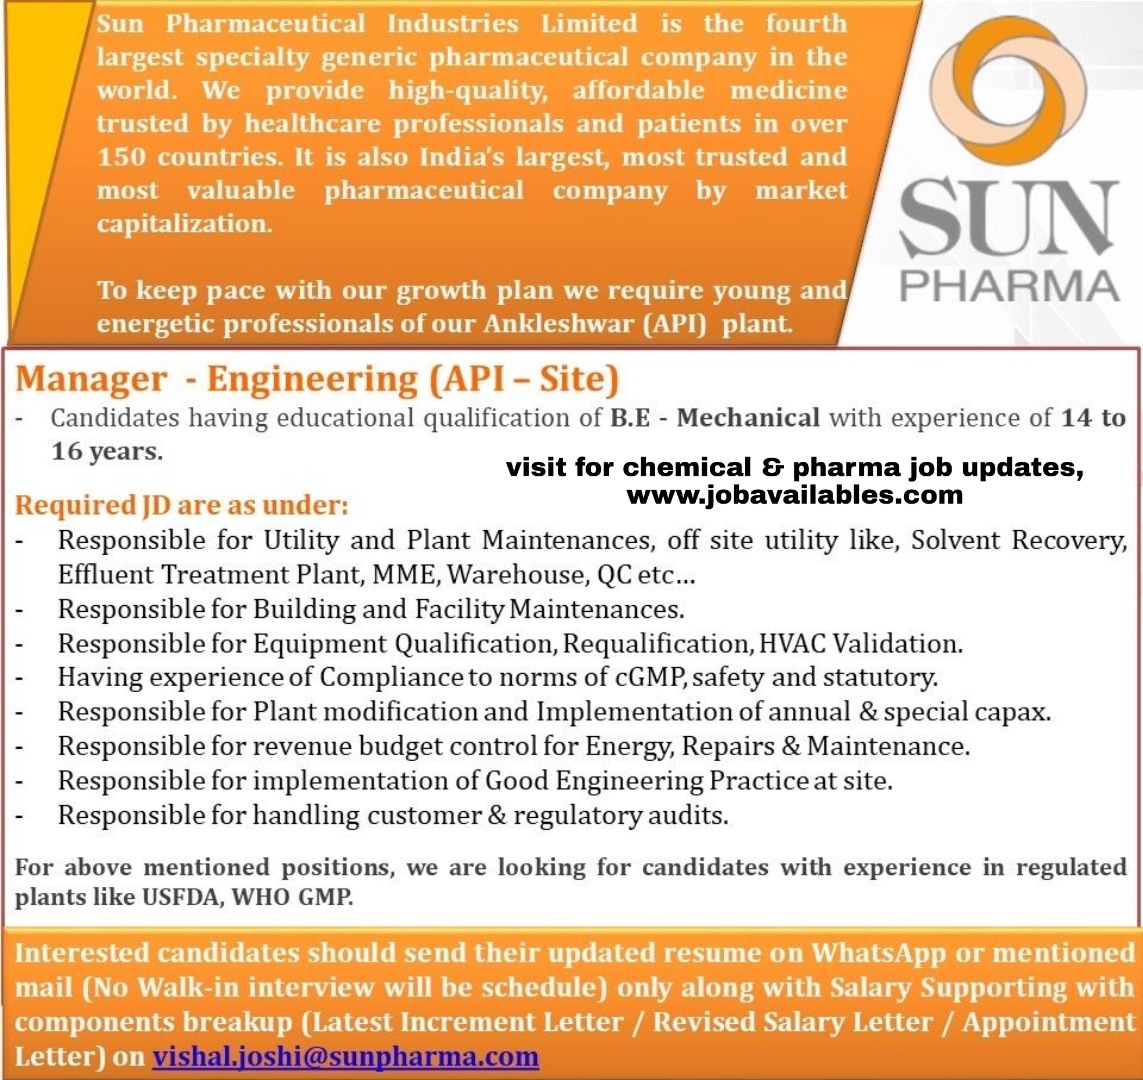 Job Availables, Sun Pharma Ltd Job Opening For B.E Mechanical - Manager Engineering (API- Site)